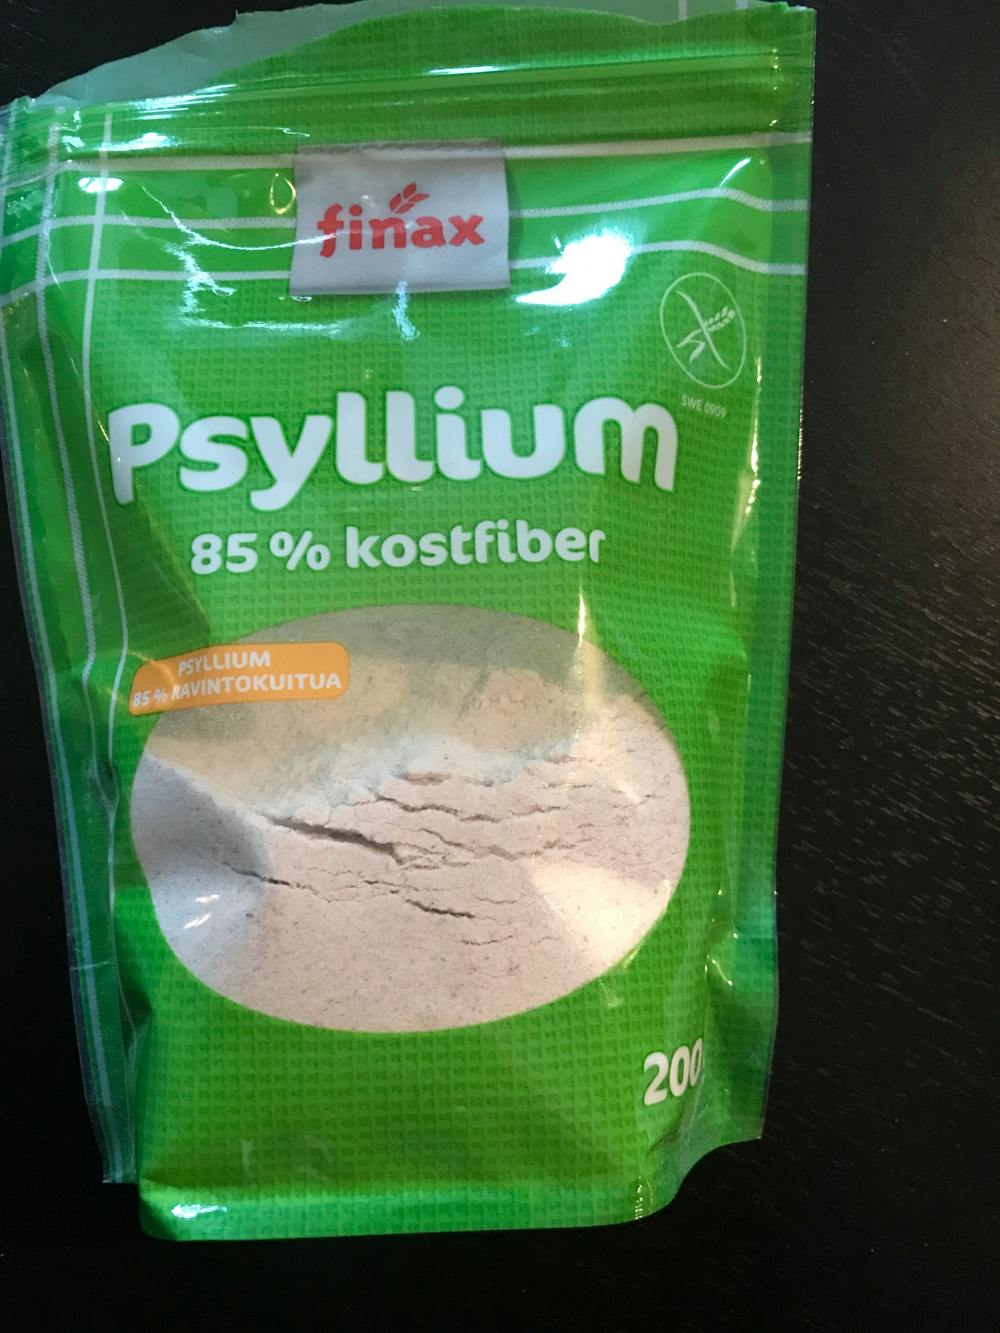 Psyllium 85% kostfiber, Finax